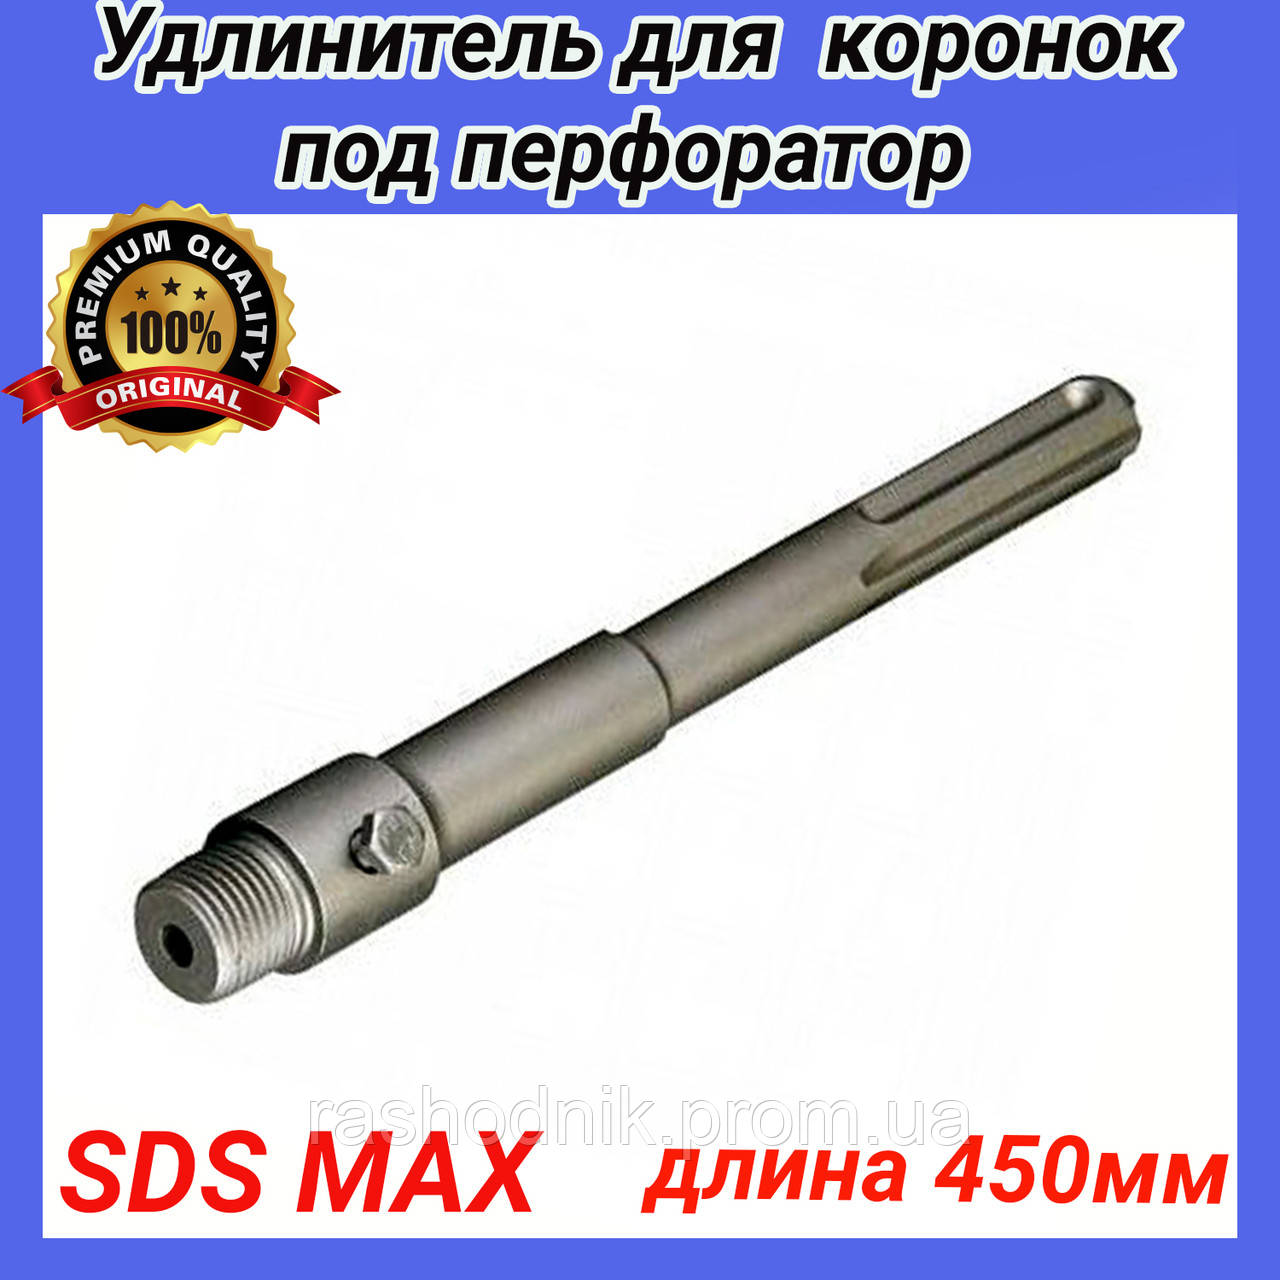 

Удлинитель хвостовик для коронок под перфоратор SDS-MAX длина 450мм резьба м22 S&T